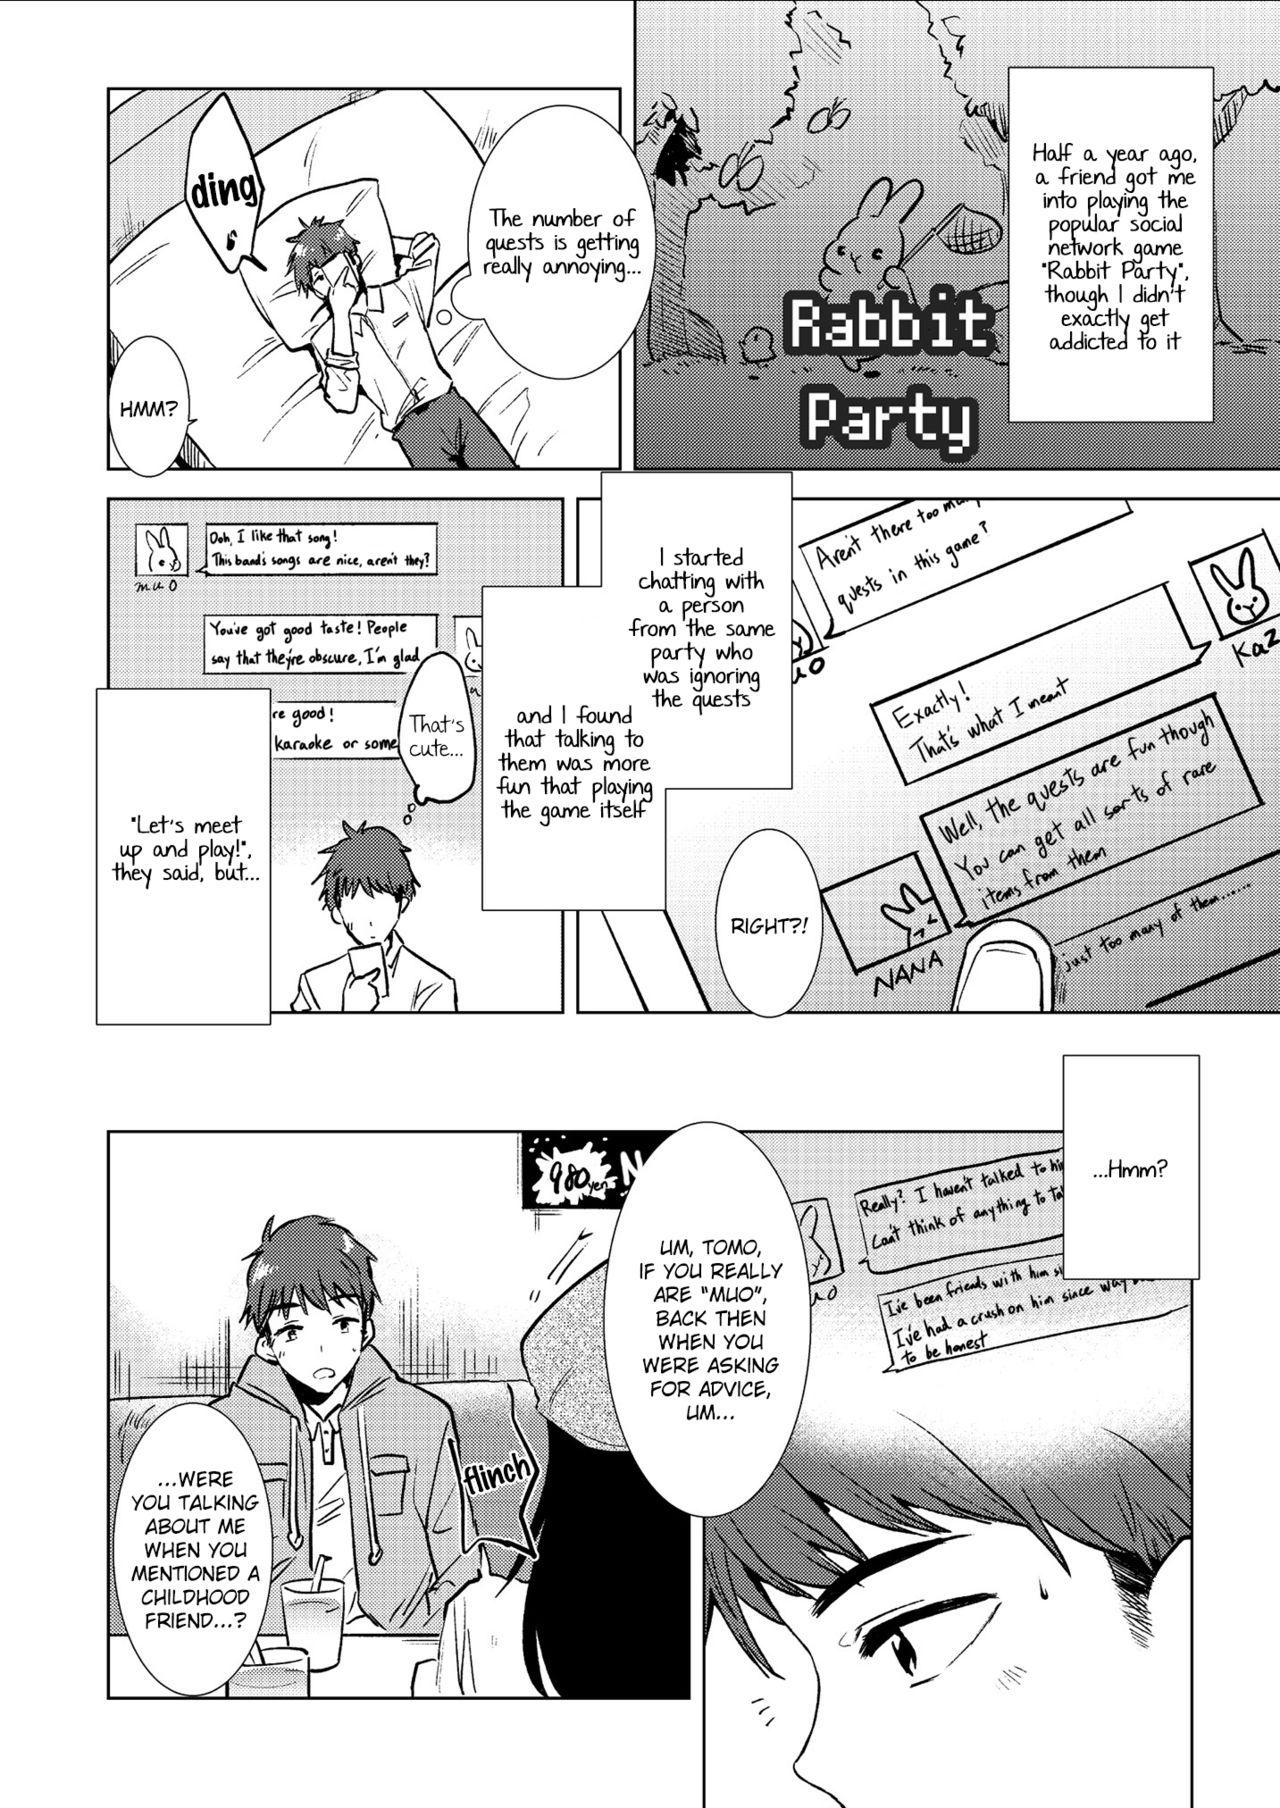 Puto RabbitPartyoffline - Original Colegiala - Page 2